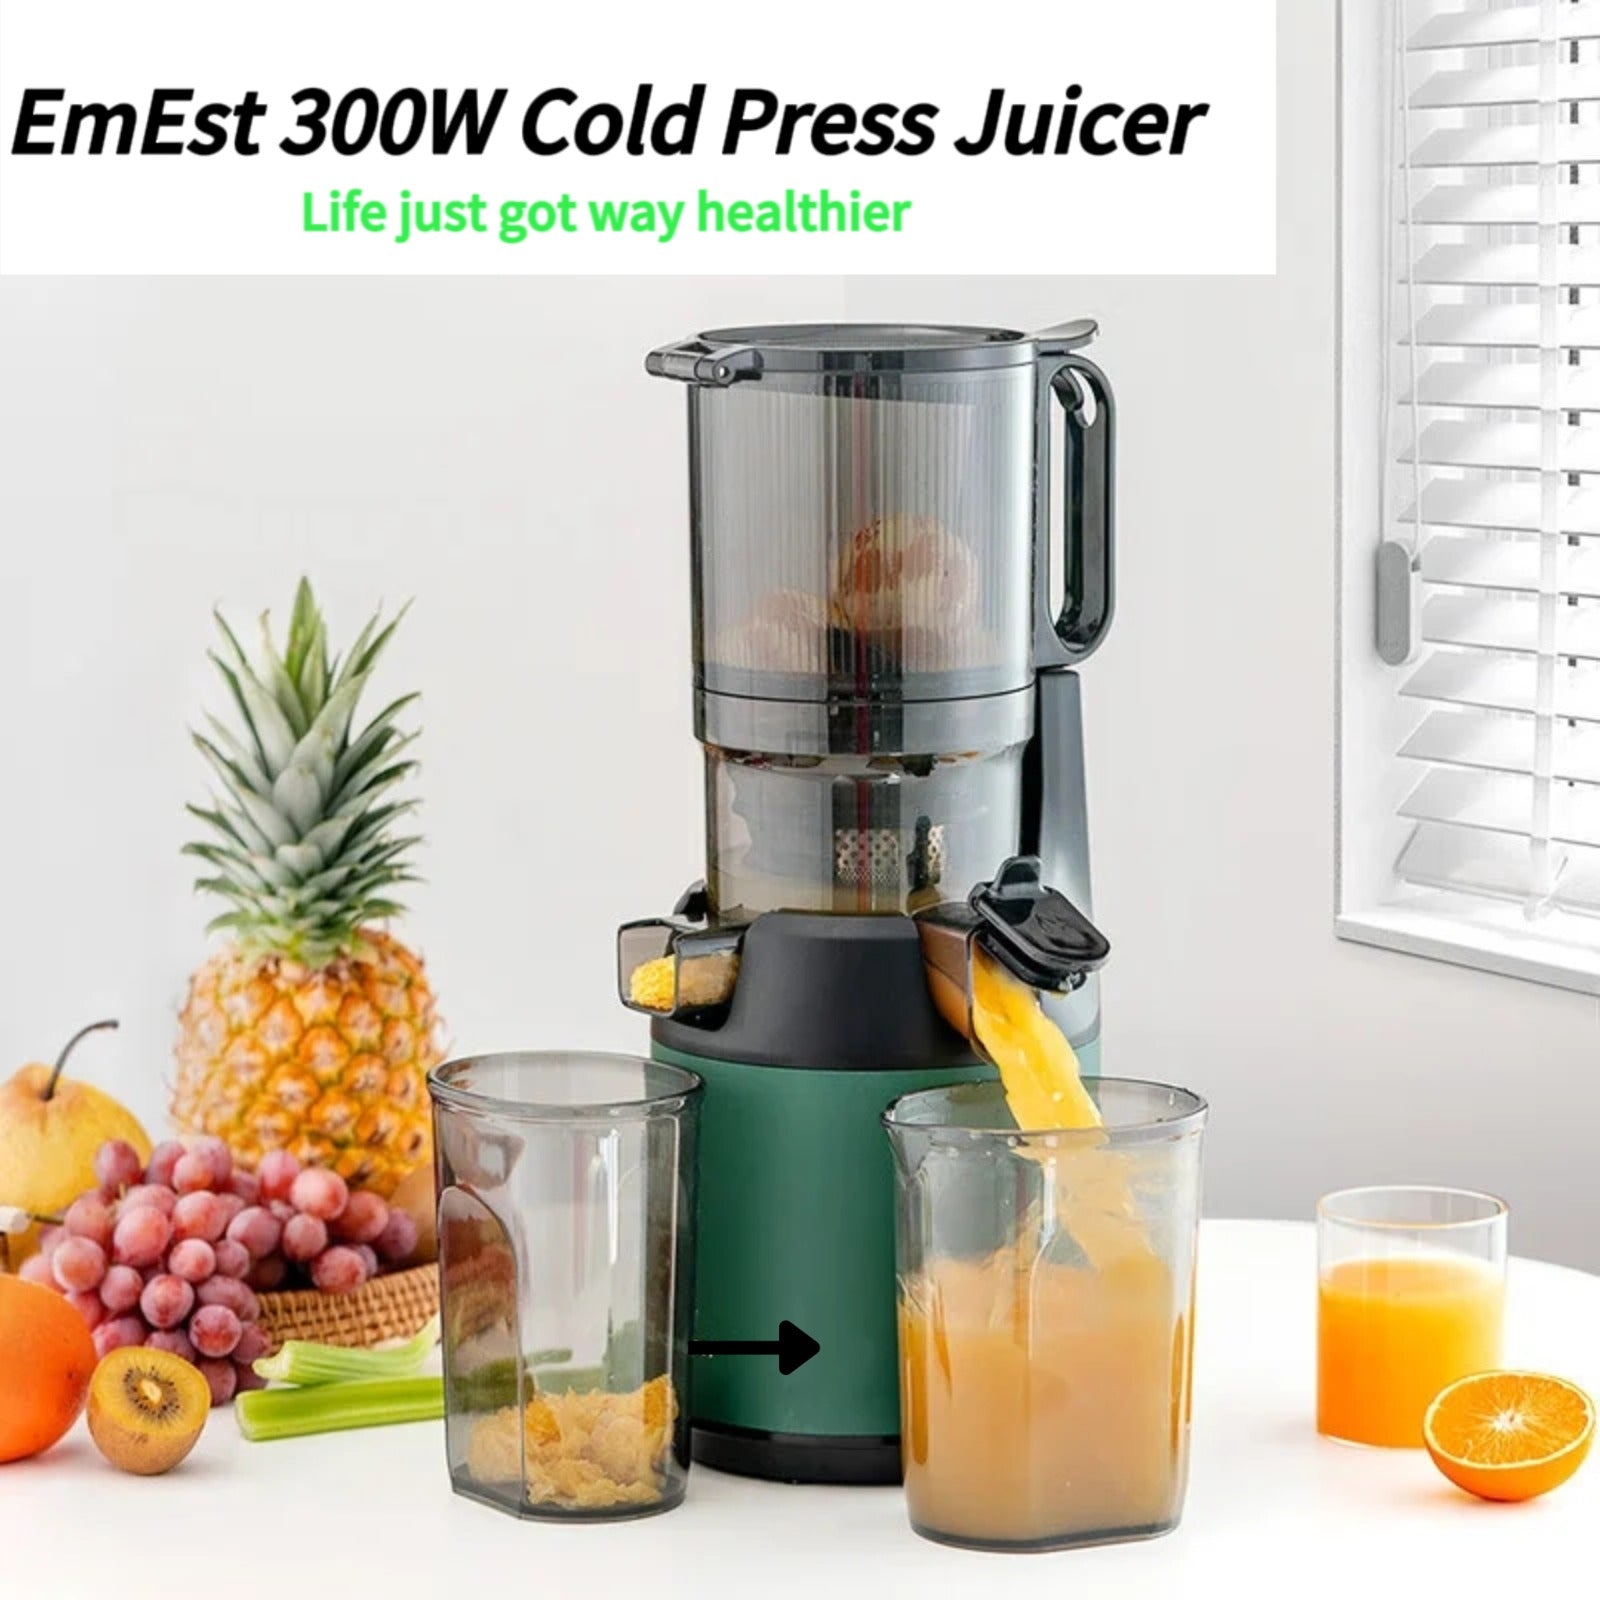 300W EmEst cold press juicer